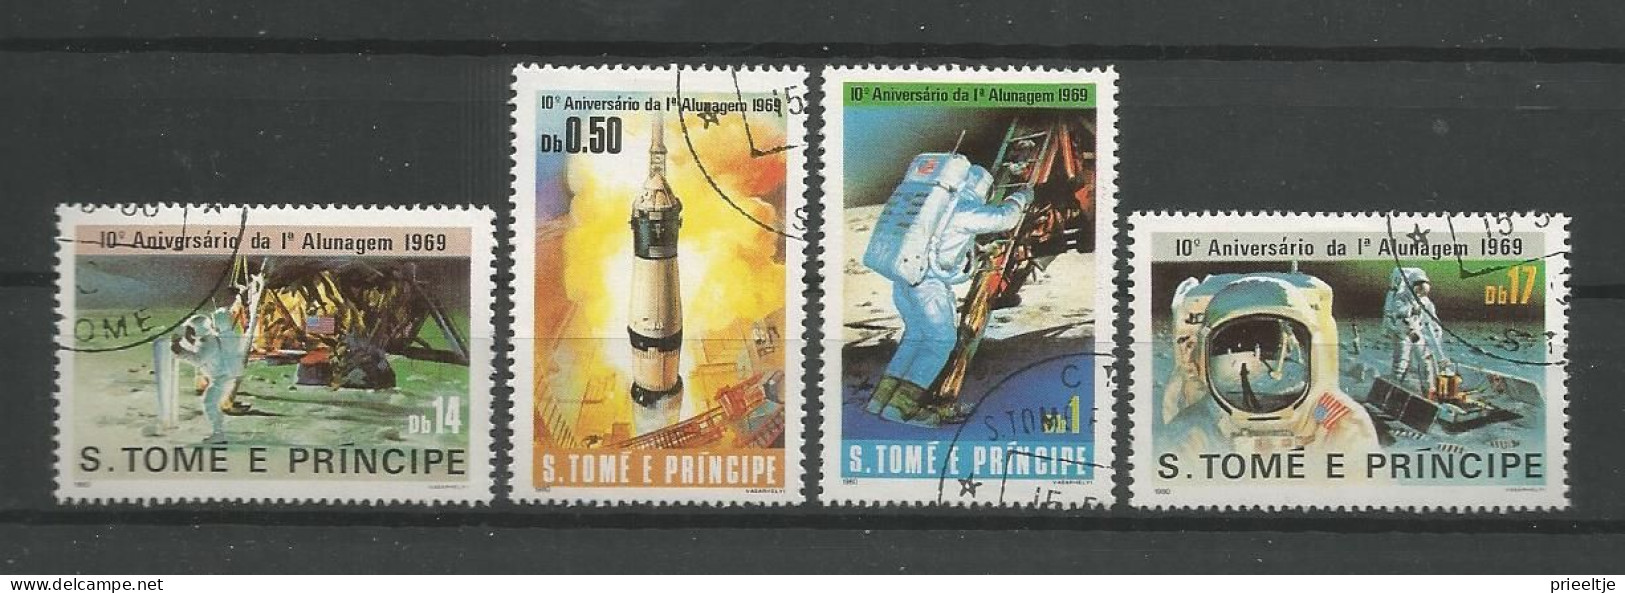 St Tome E Principe 1980 Space 10th Anniv. 1st Man On The Moon  Y.T. 594/597 (0) - Sao Tome And Principe